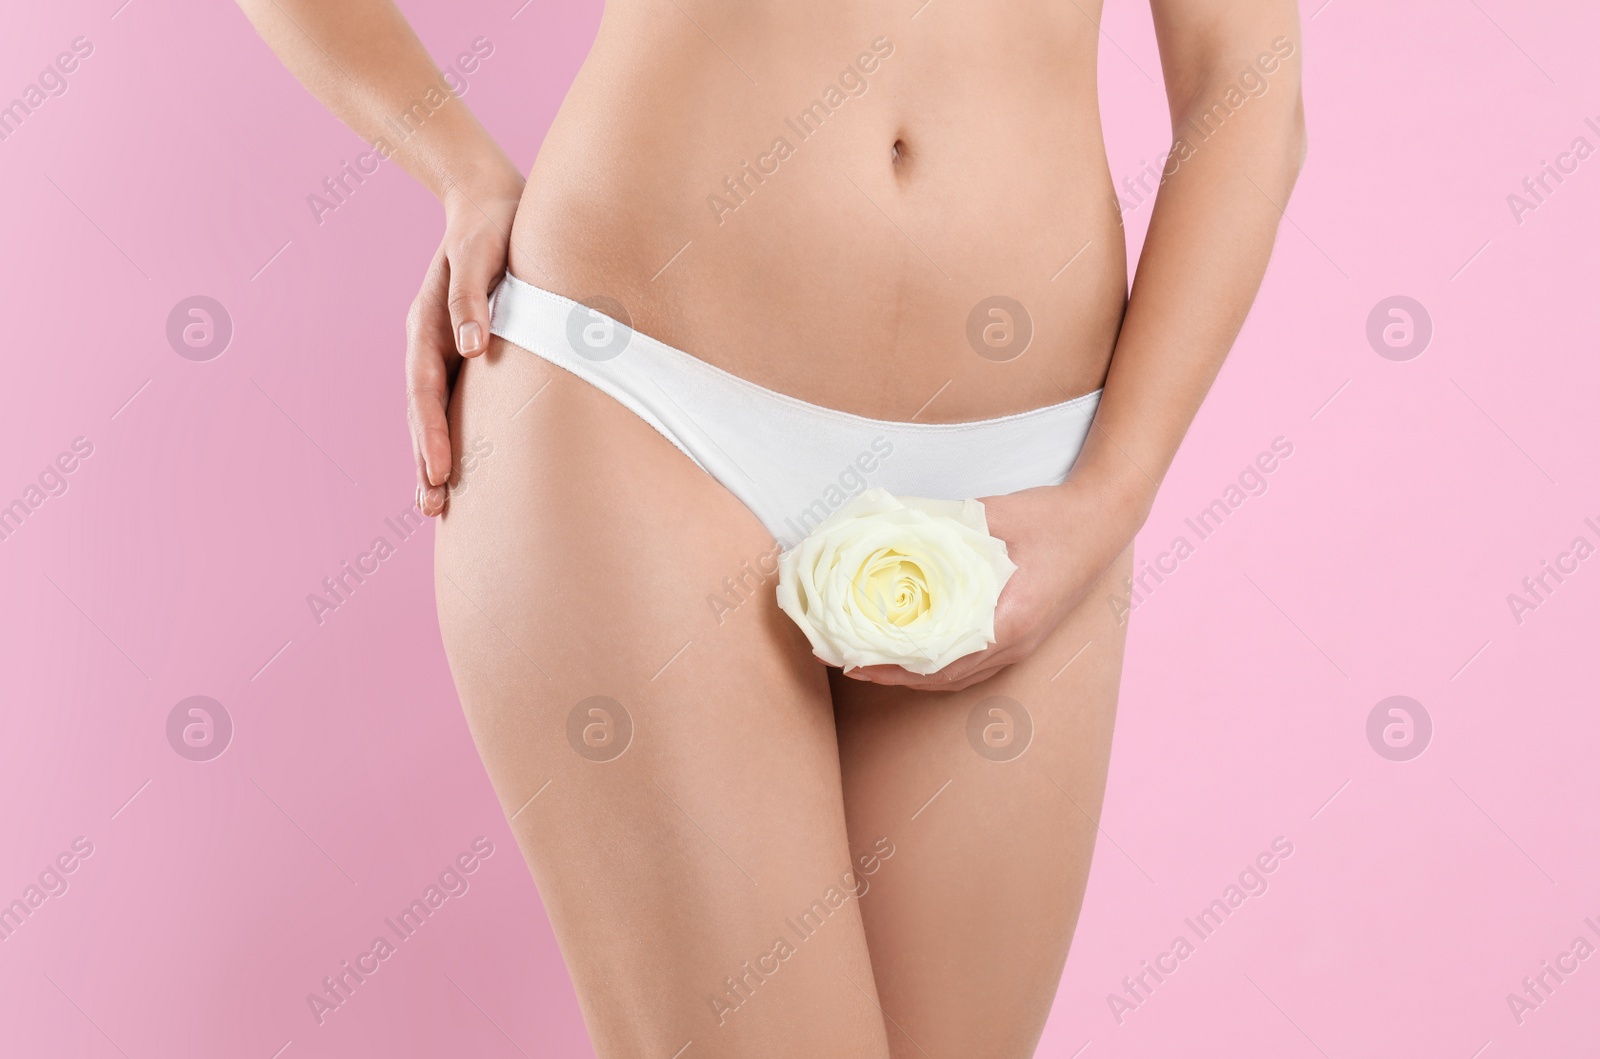 Photo of Woman with rose showing smooth skin on pink background, closeup. Brazilian bikini epilation